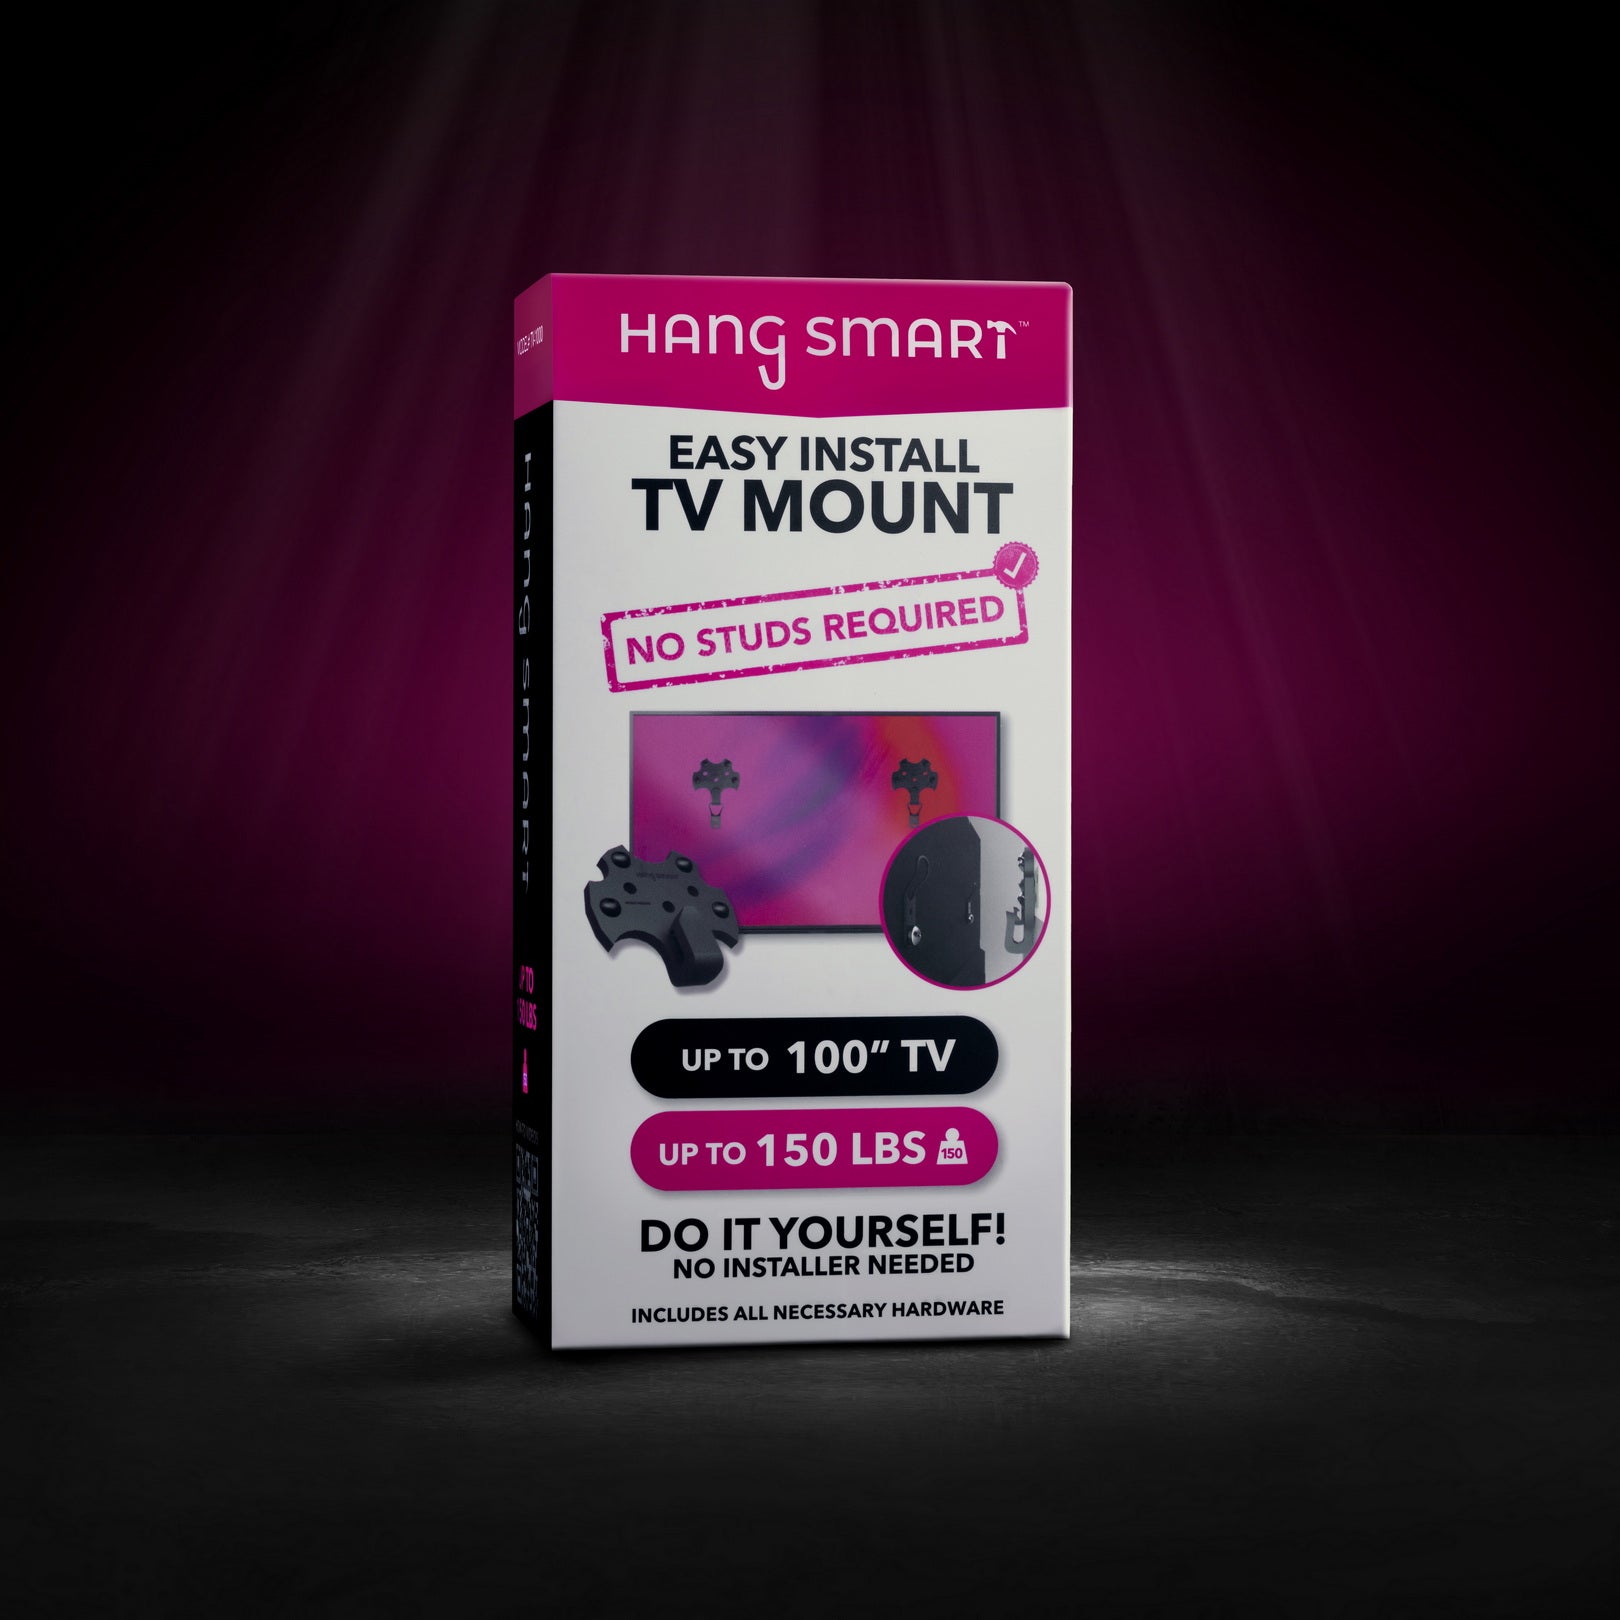 hangsmart tv product box